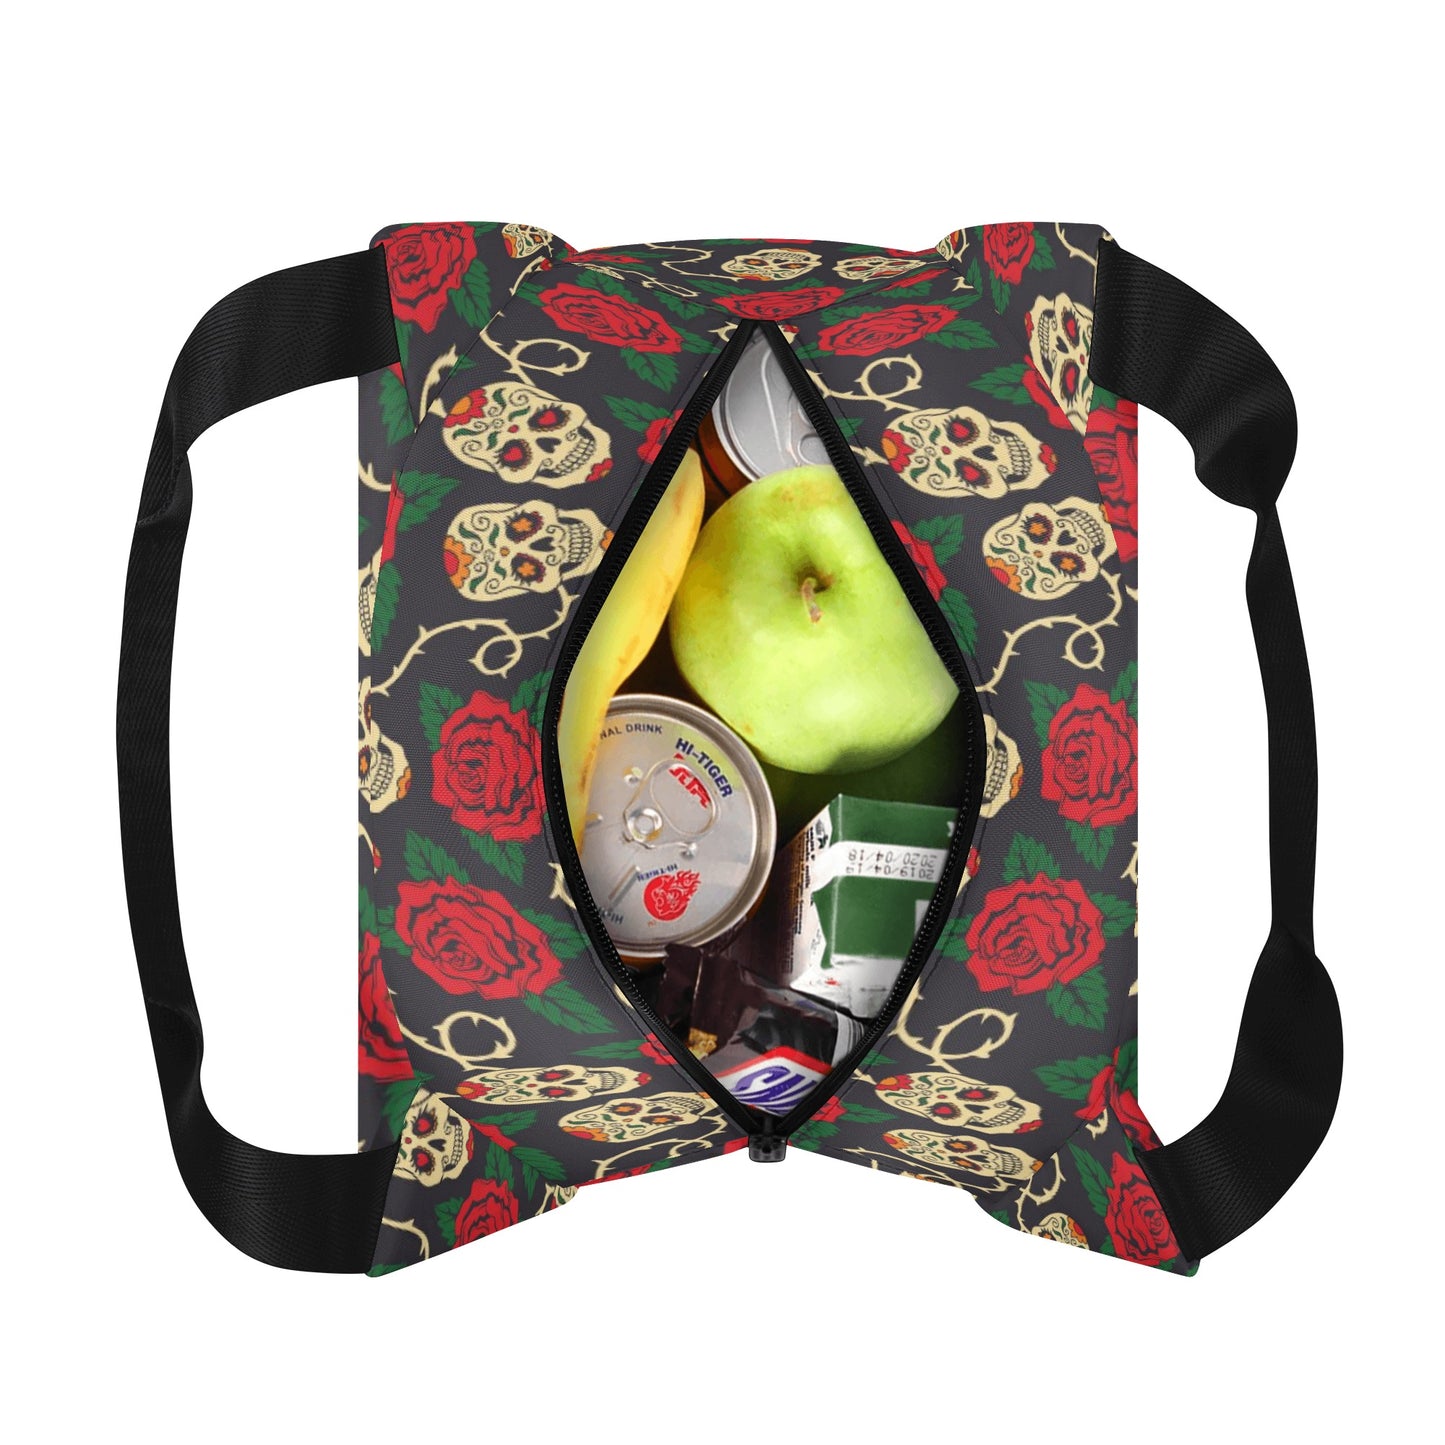 Floral sugar skull pattern Portable Tote Lunch Bag